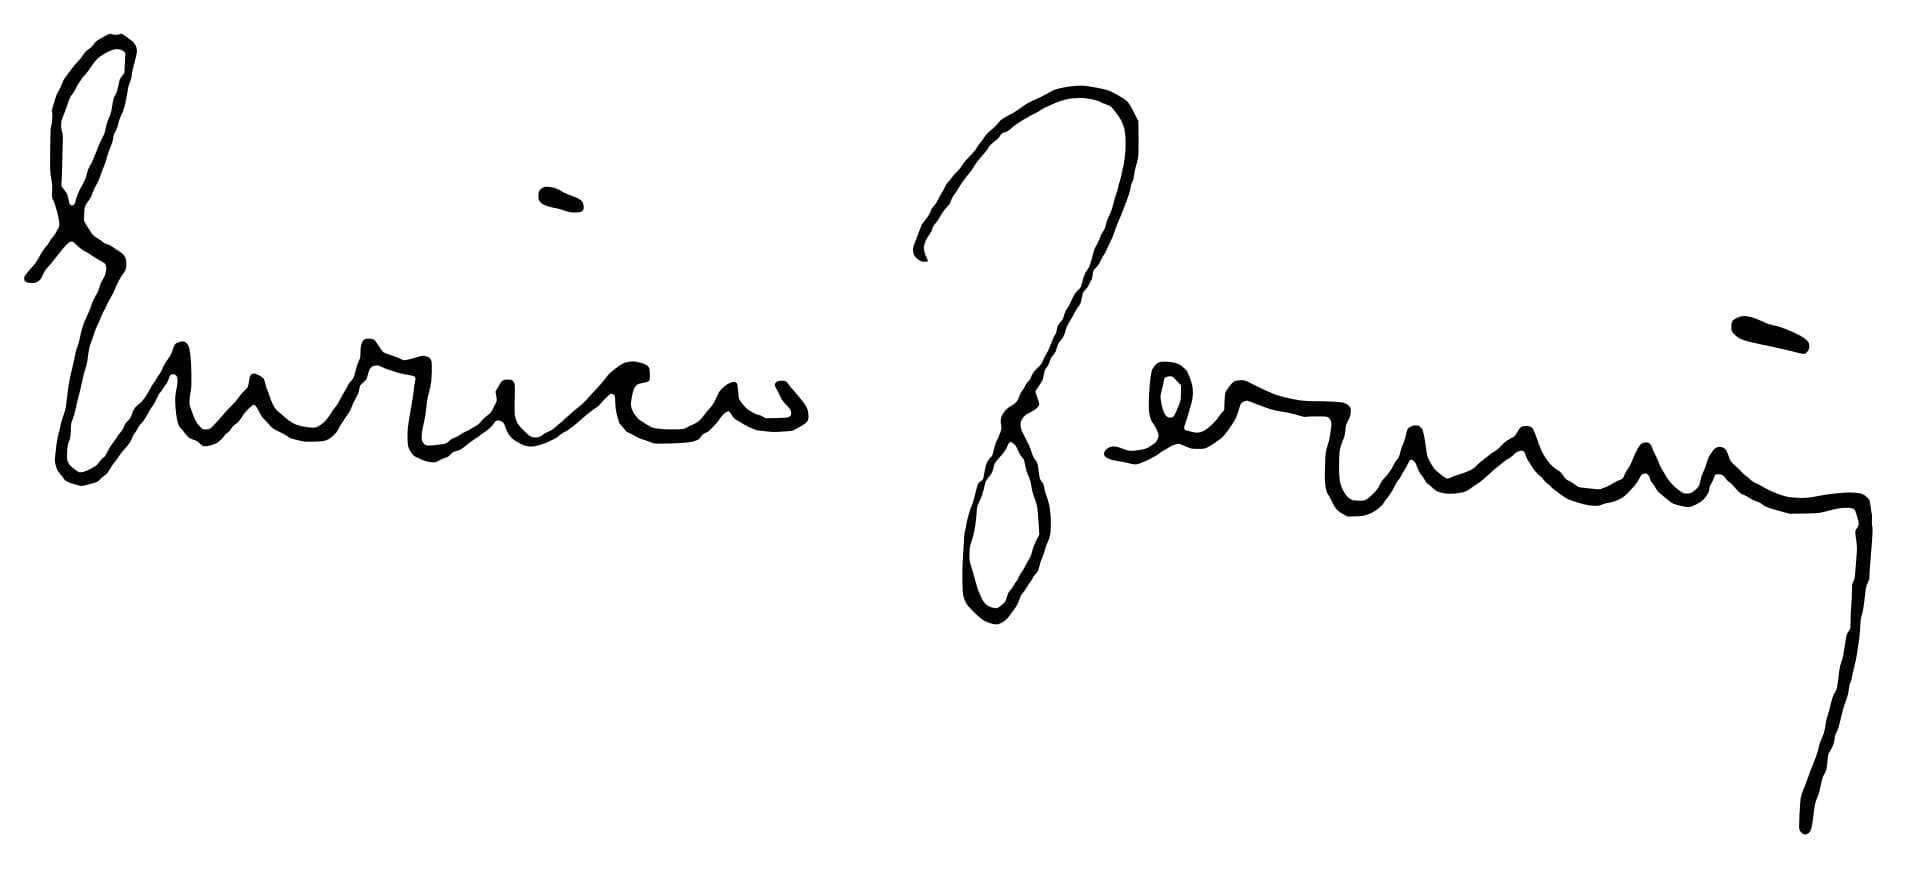 Enrico Fermi Signature